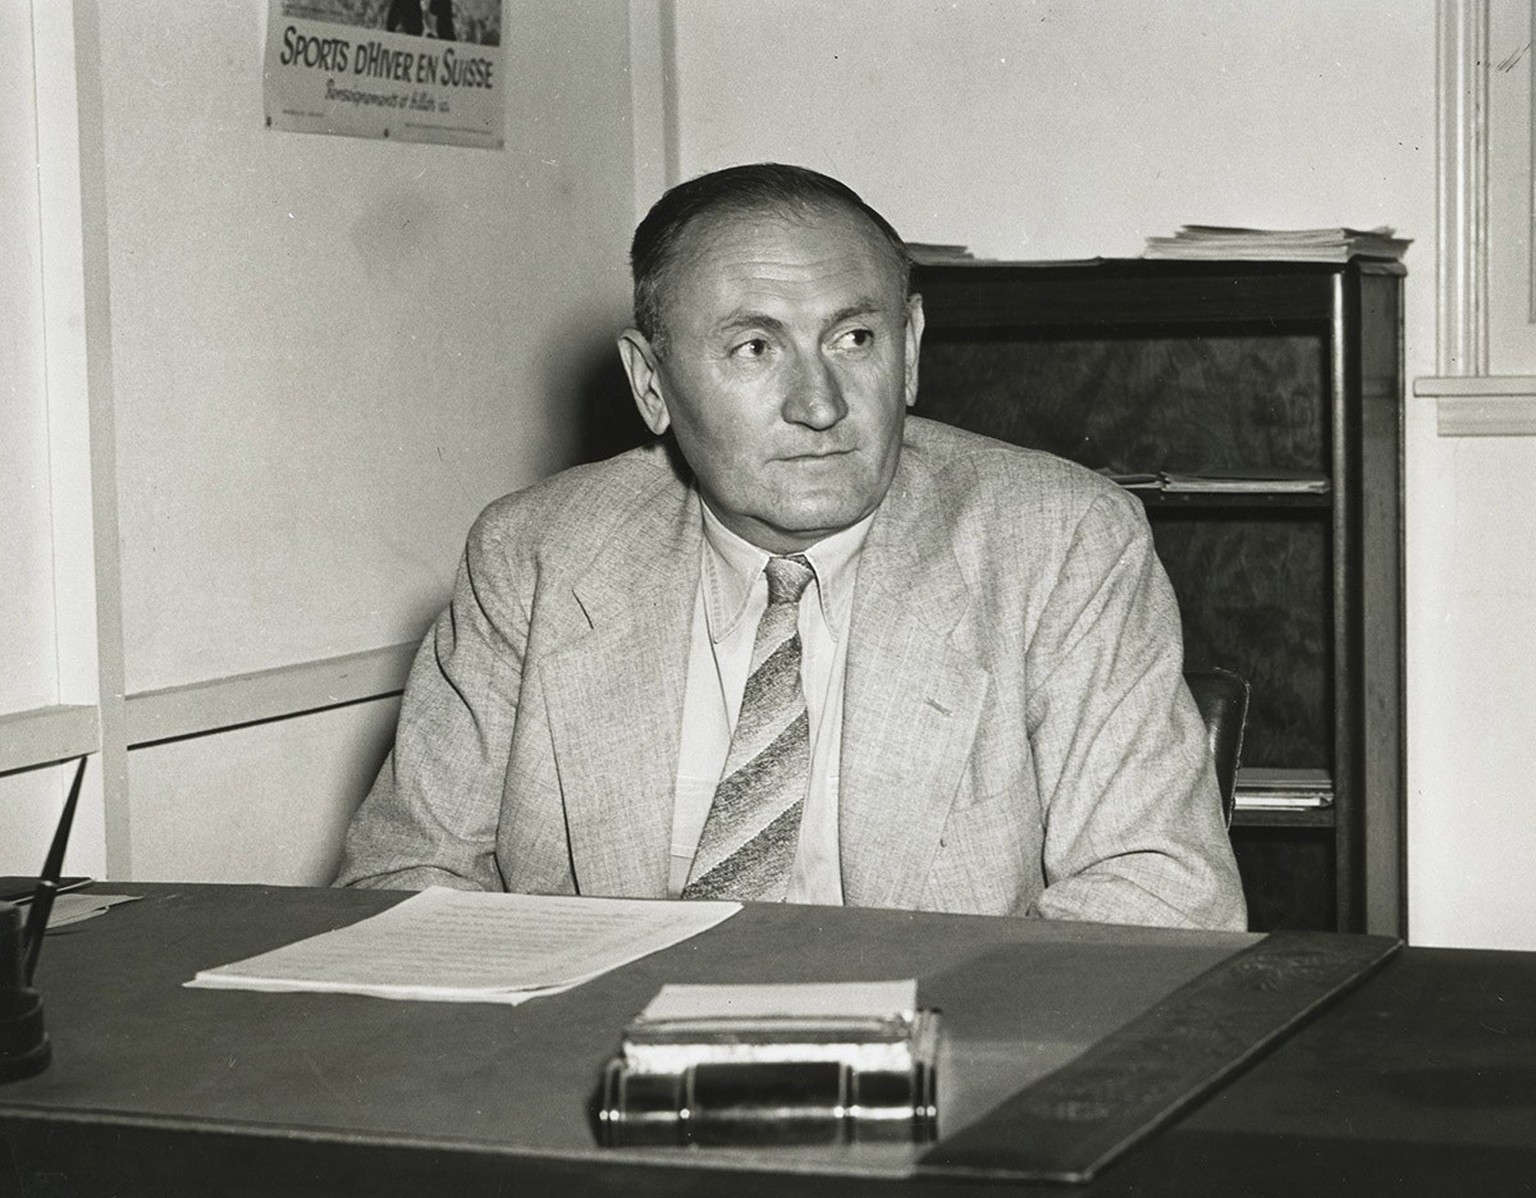 Fritz Zwicky 1947 in seinem Büro in Kalifornien.
https://ba.e-pics.ethz.ch/catalog/ETHBIB.Bildarchiv/r/33550/viewmode=infoview/qsr=fritz%20zwicky